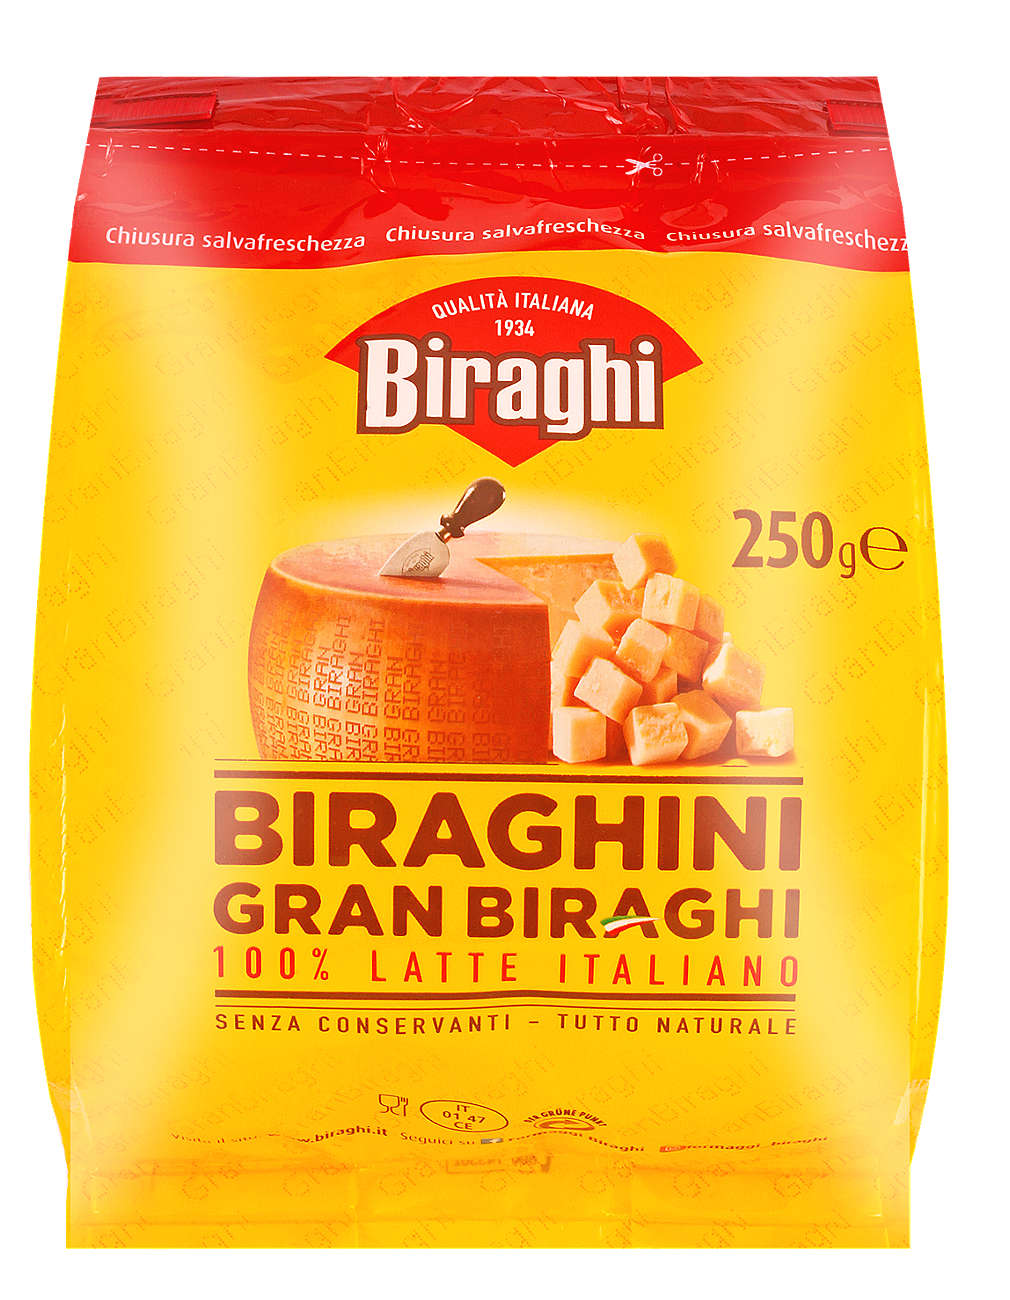 Fotografija ponude Gran Biraghi biraghini kockice, tvrdi kravlji sir